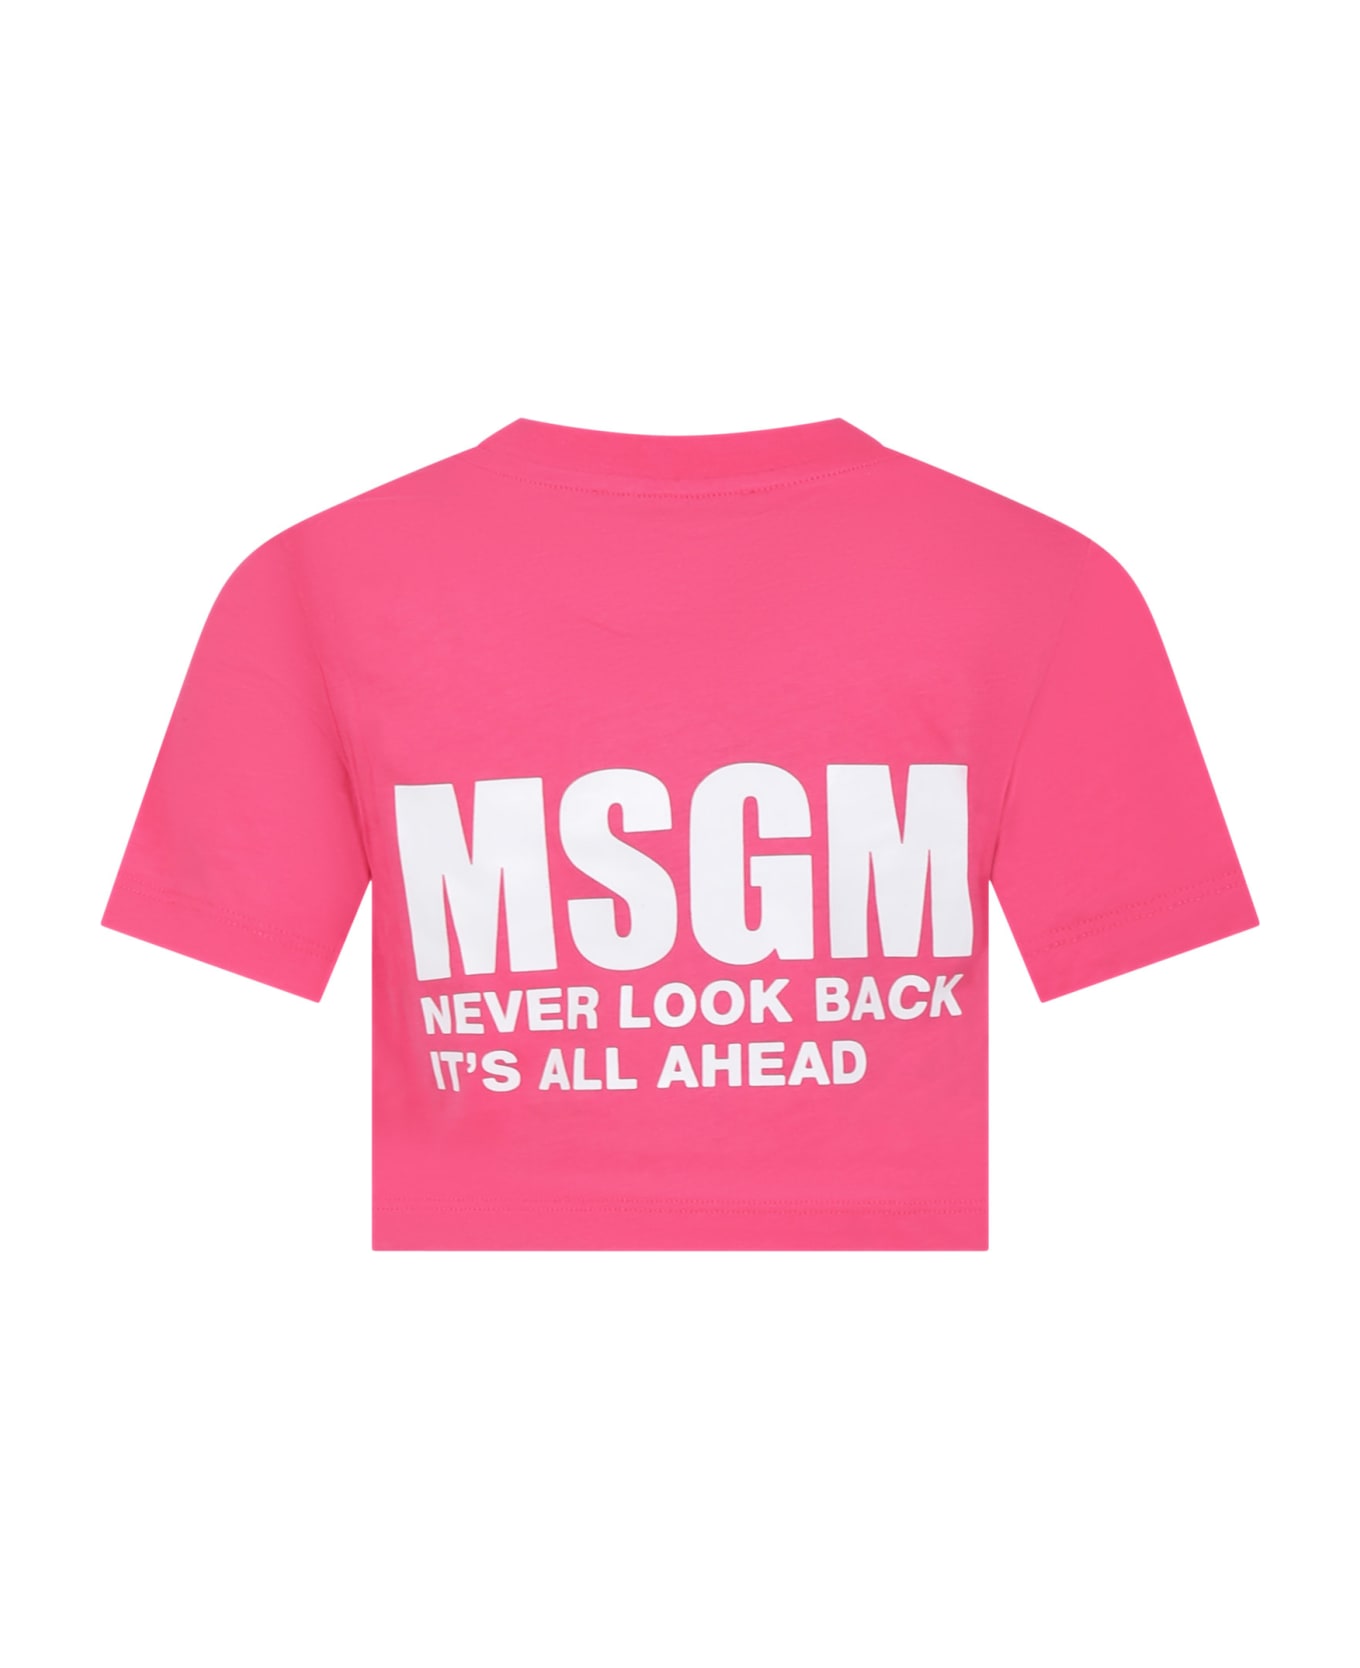 MSGM Fuchsia T-shirt For Girl With Logo - Fucsia